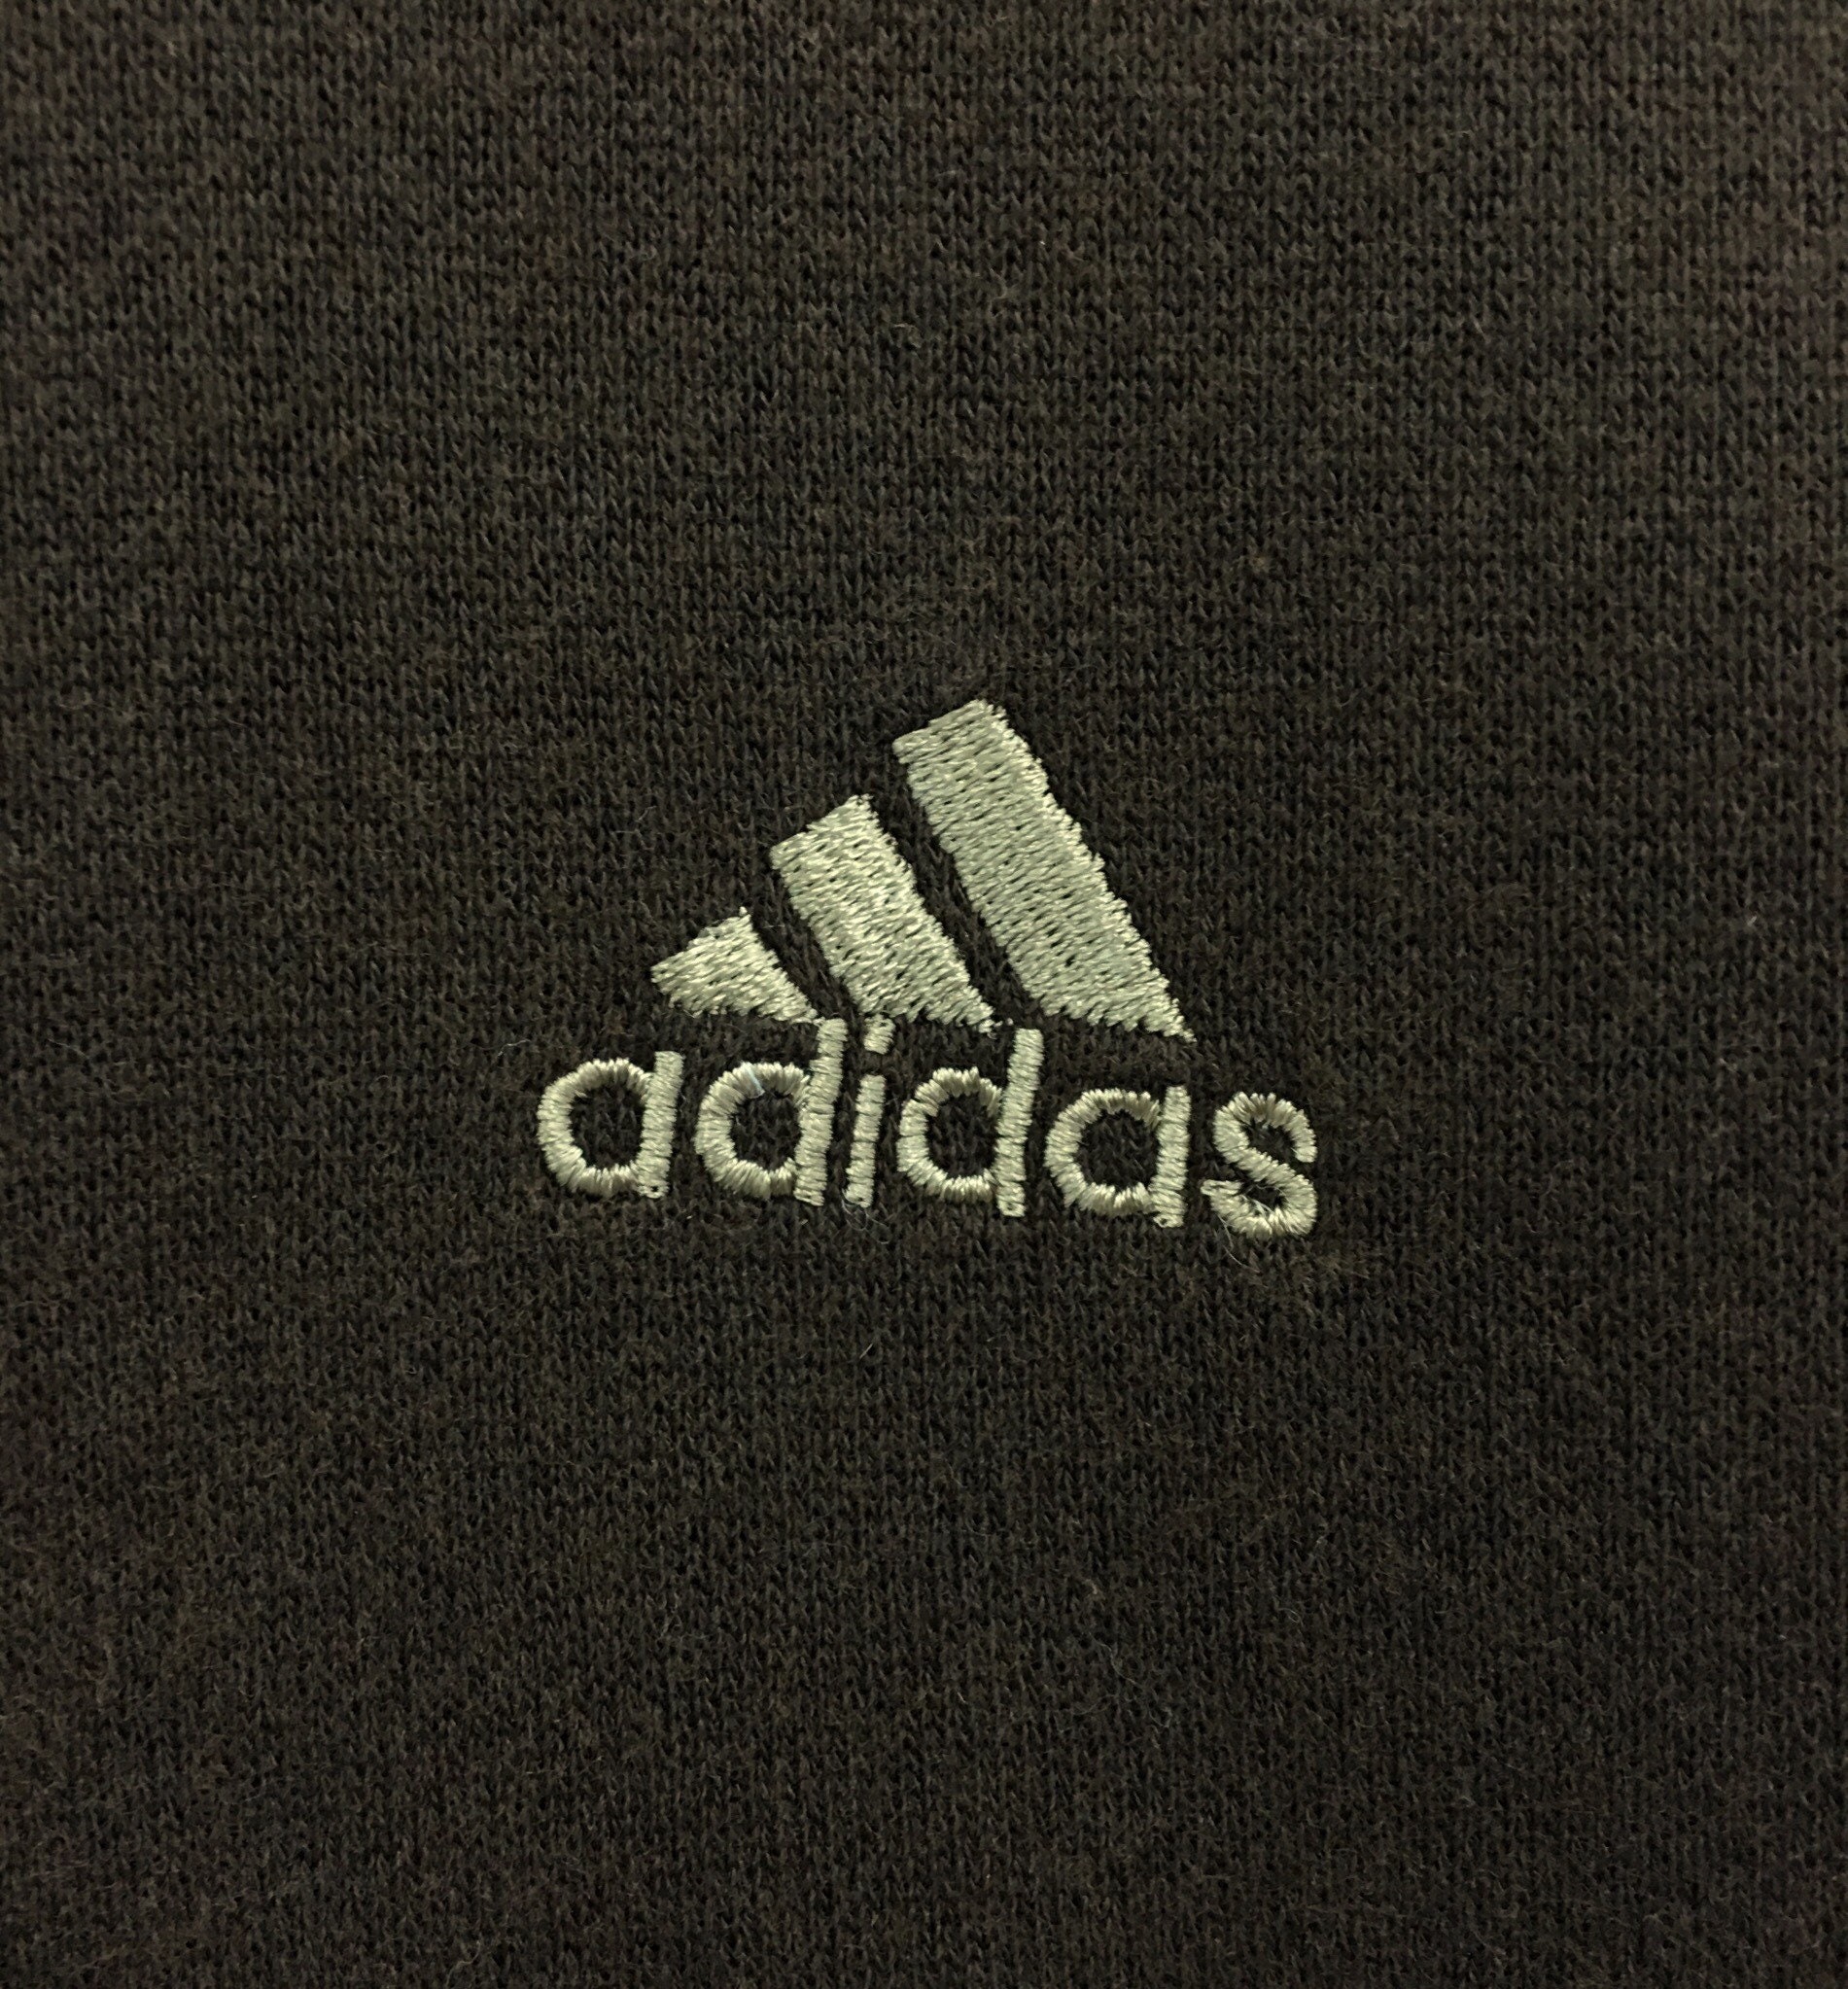 Adidas Zipped Up Sweatshirt Jumper Embroidery Small Logo | Etsy